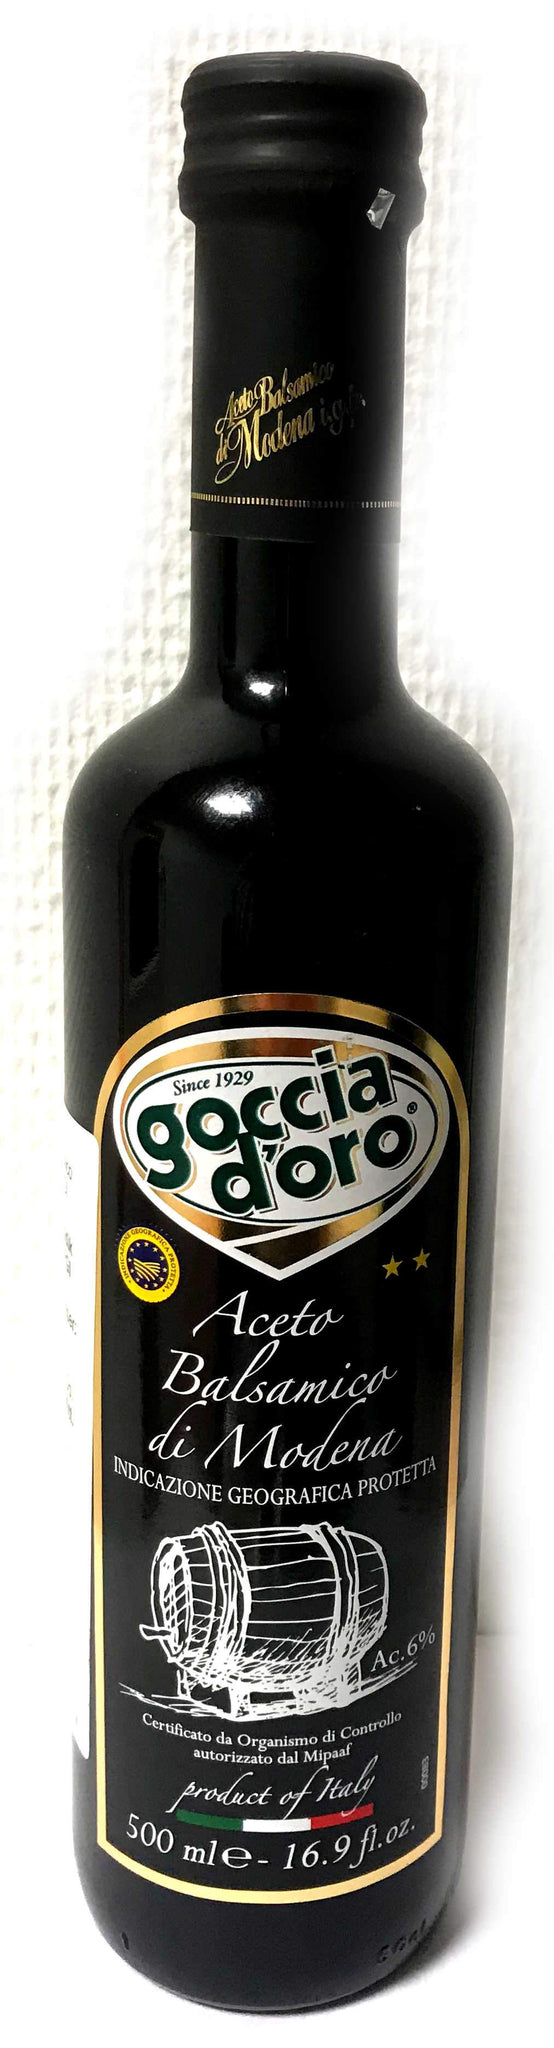 Balsamico-eddik-goccia-doro-12x500 ml